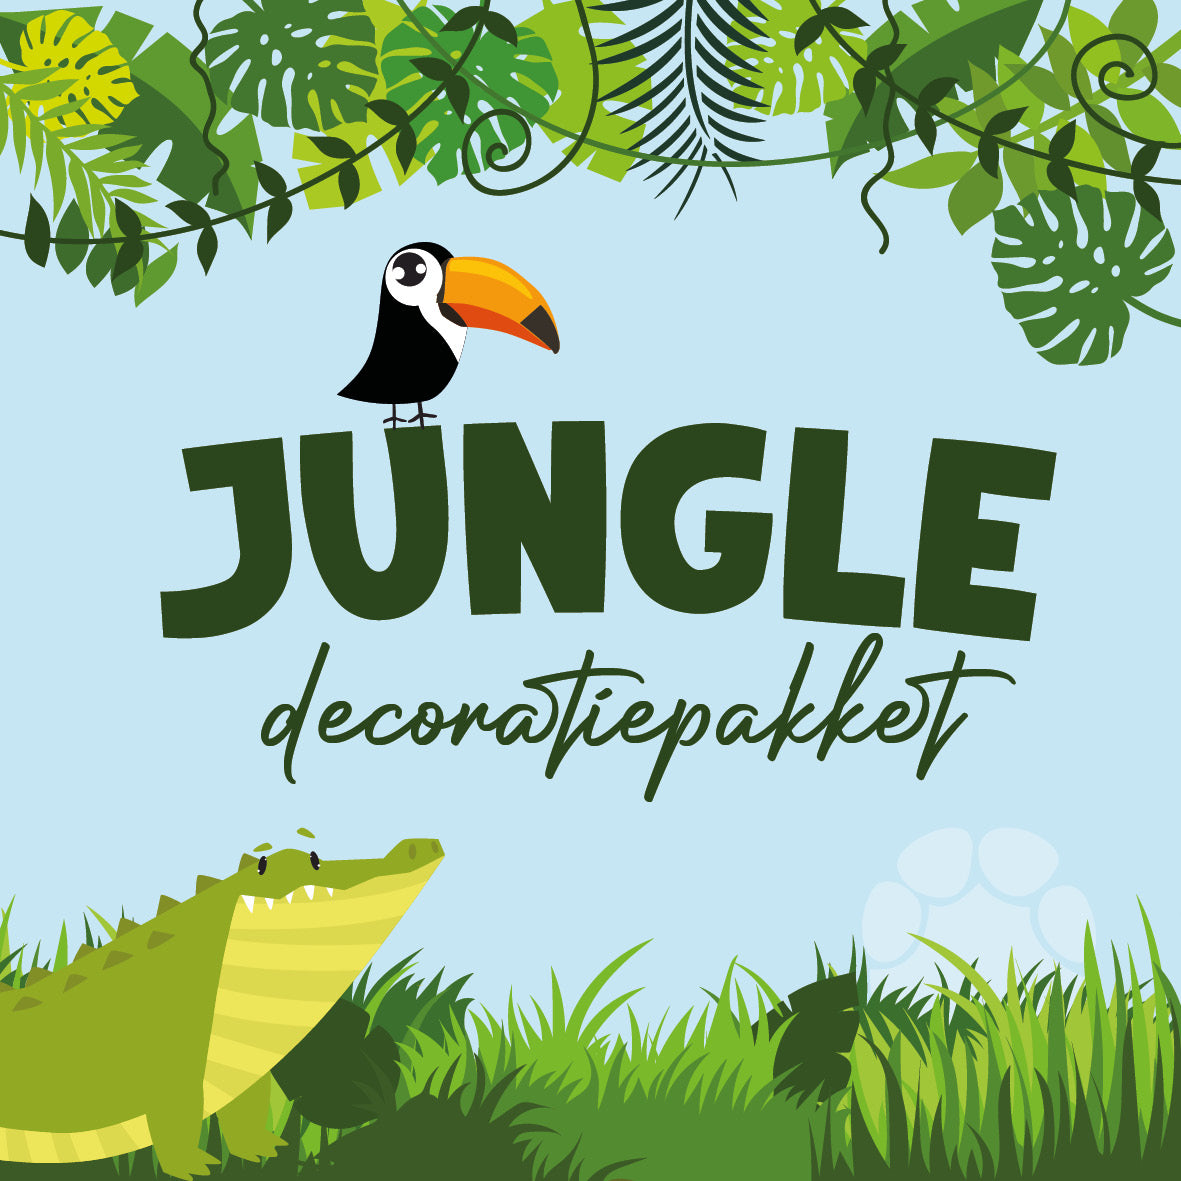 Versiering junglefeest (printable)